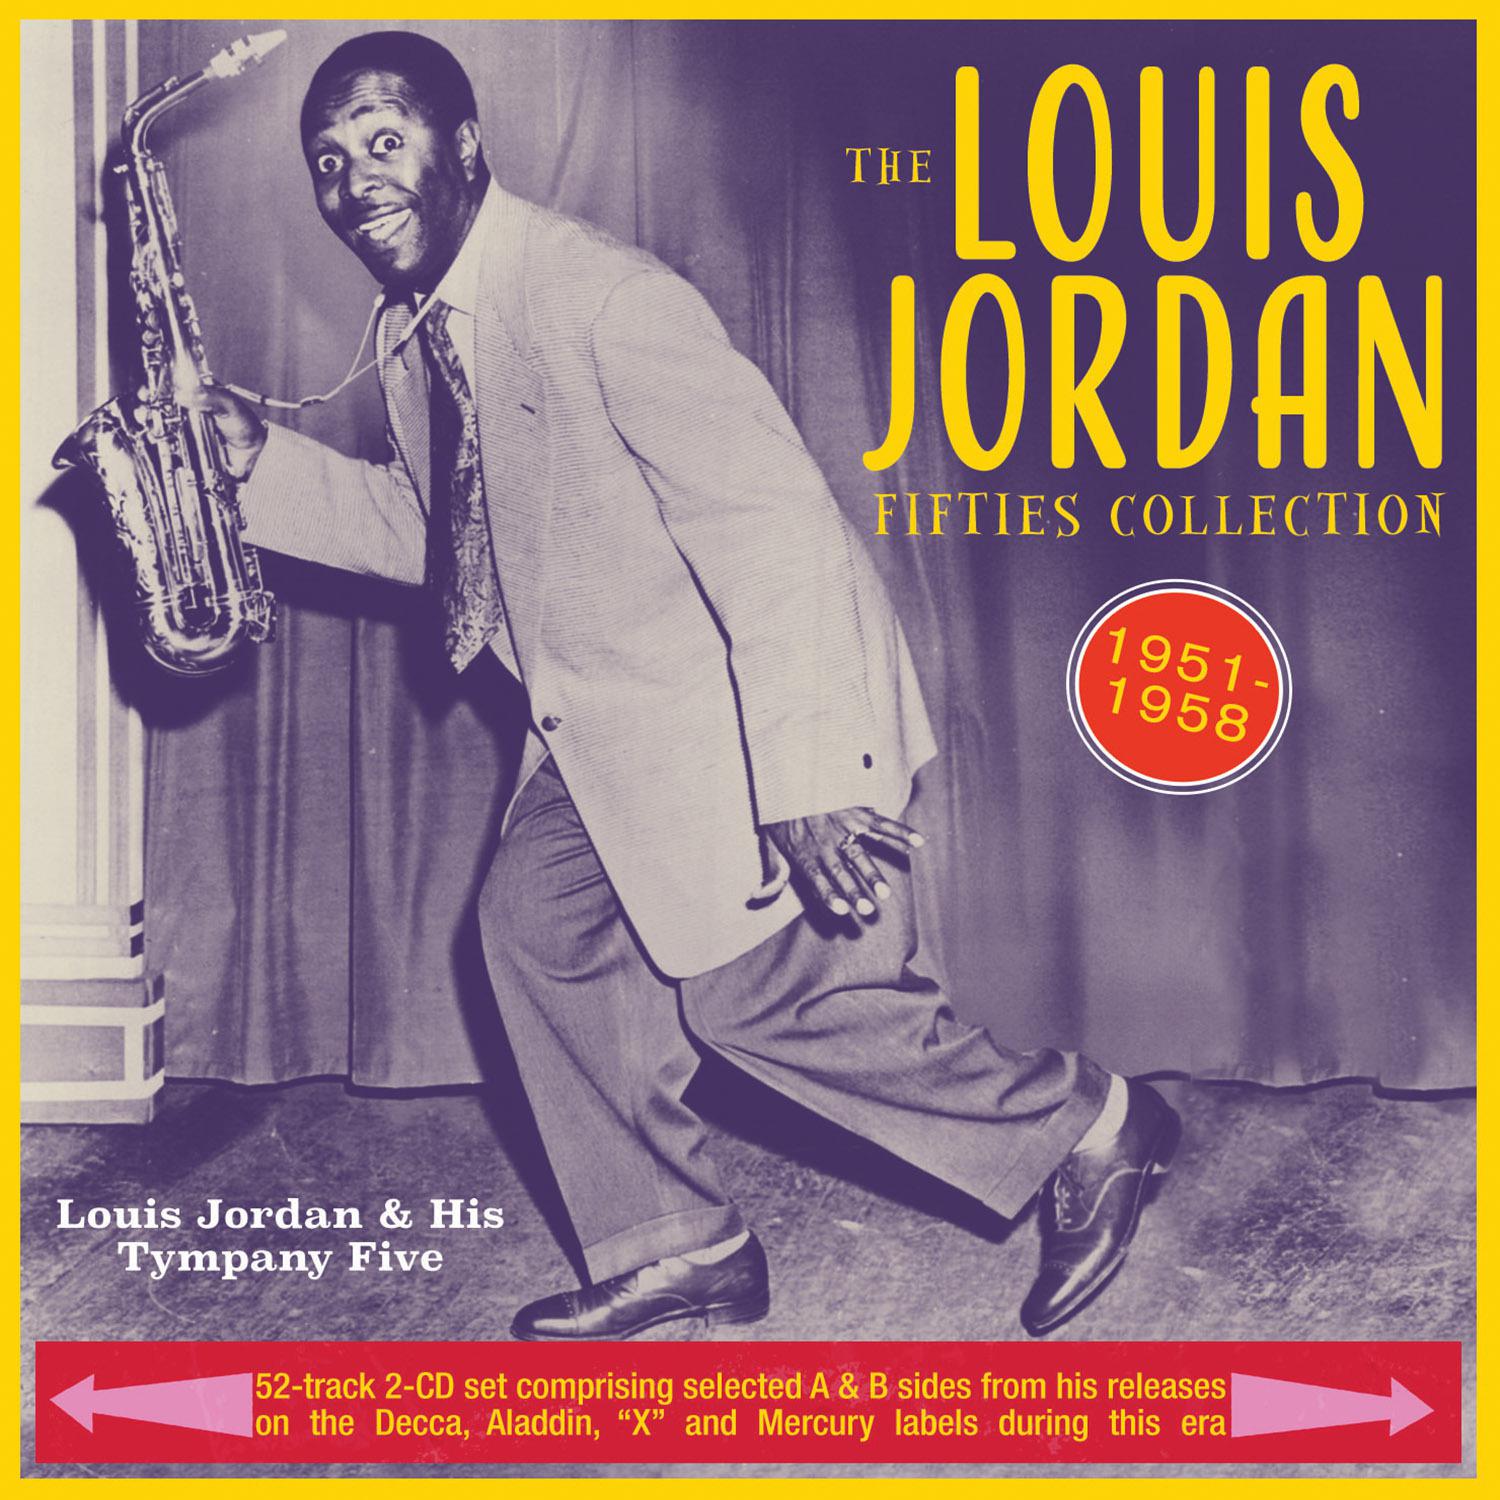 Louis Jordan and his Tympany Five - A Dollar Down